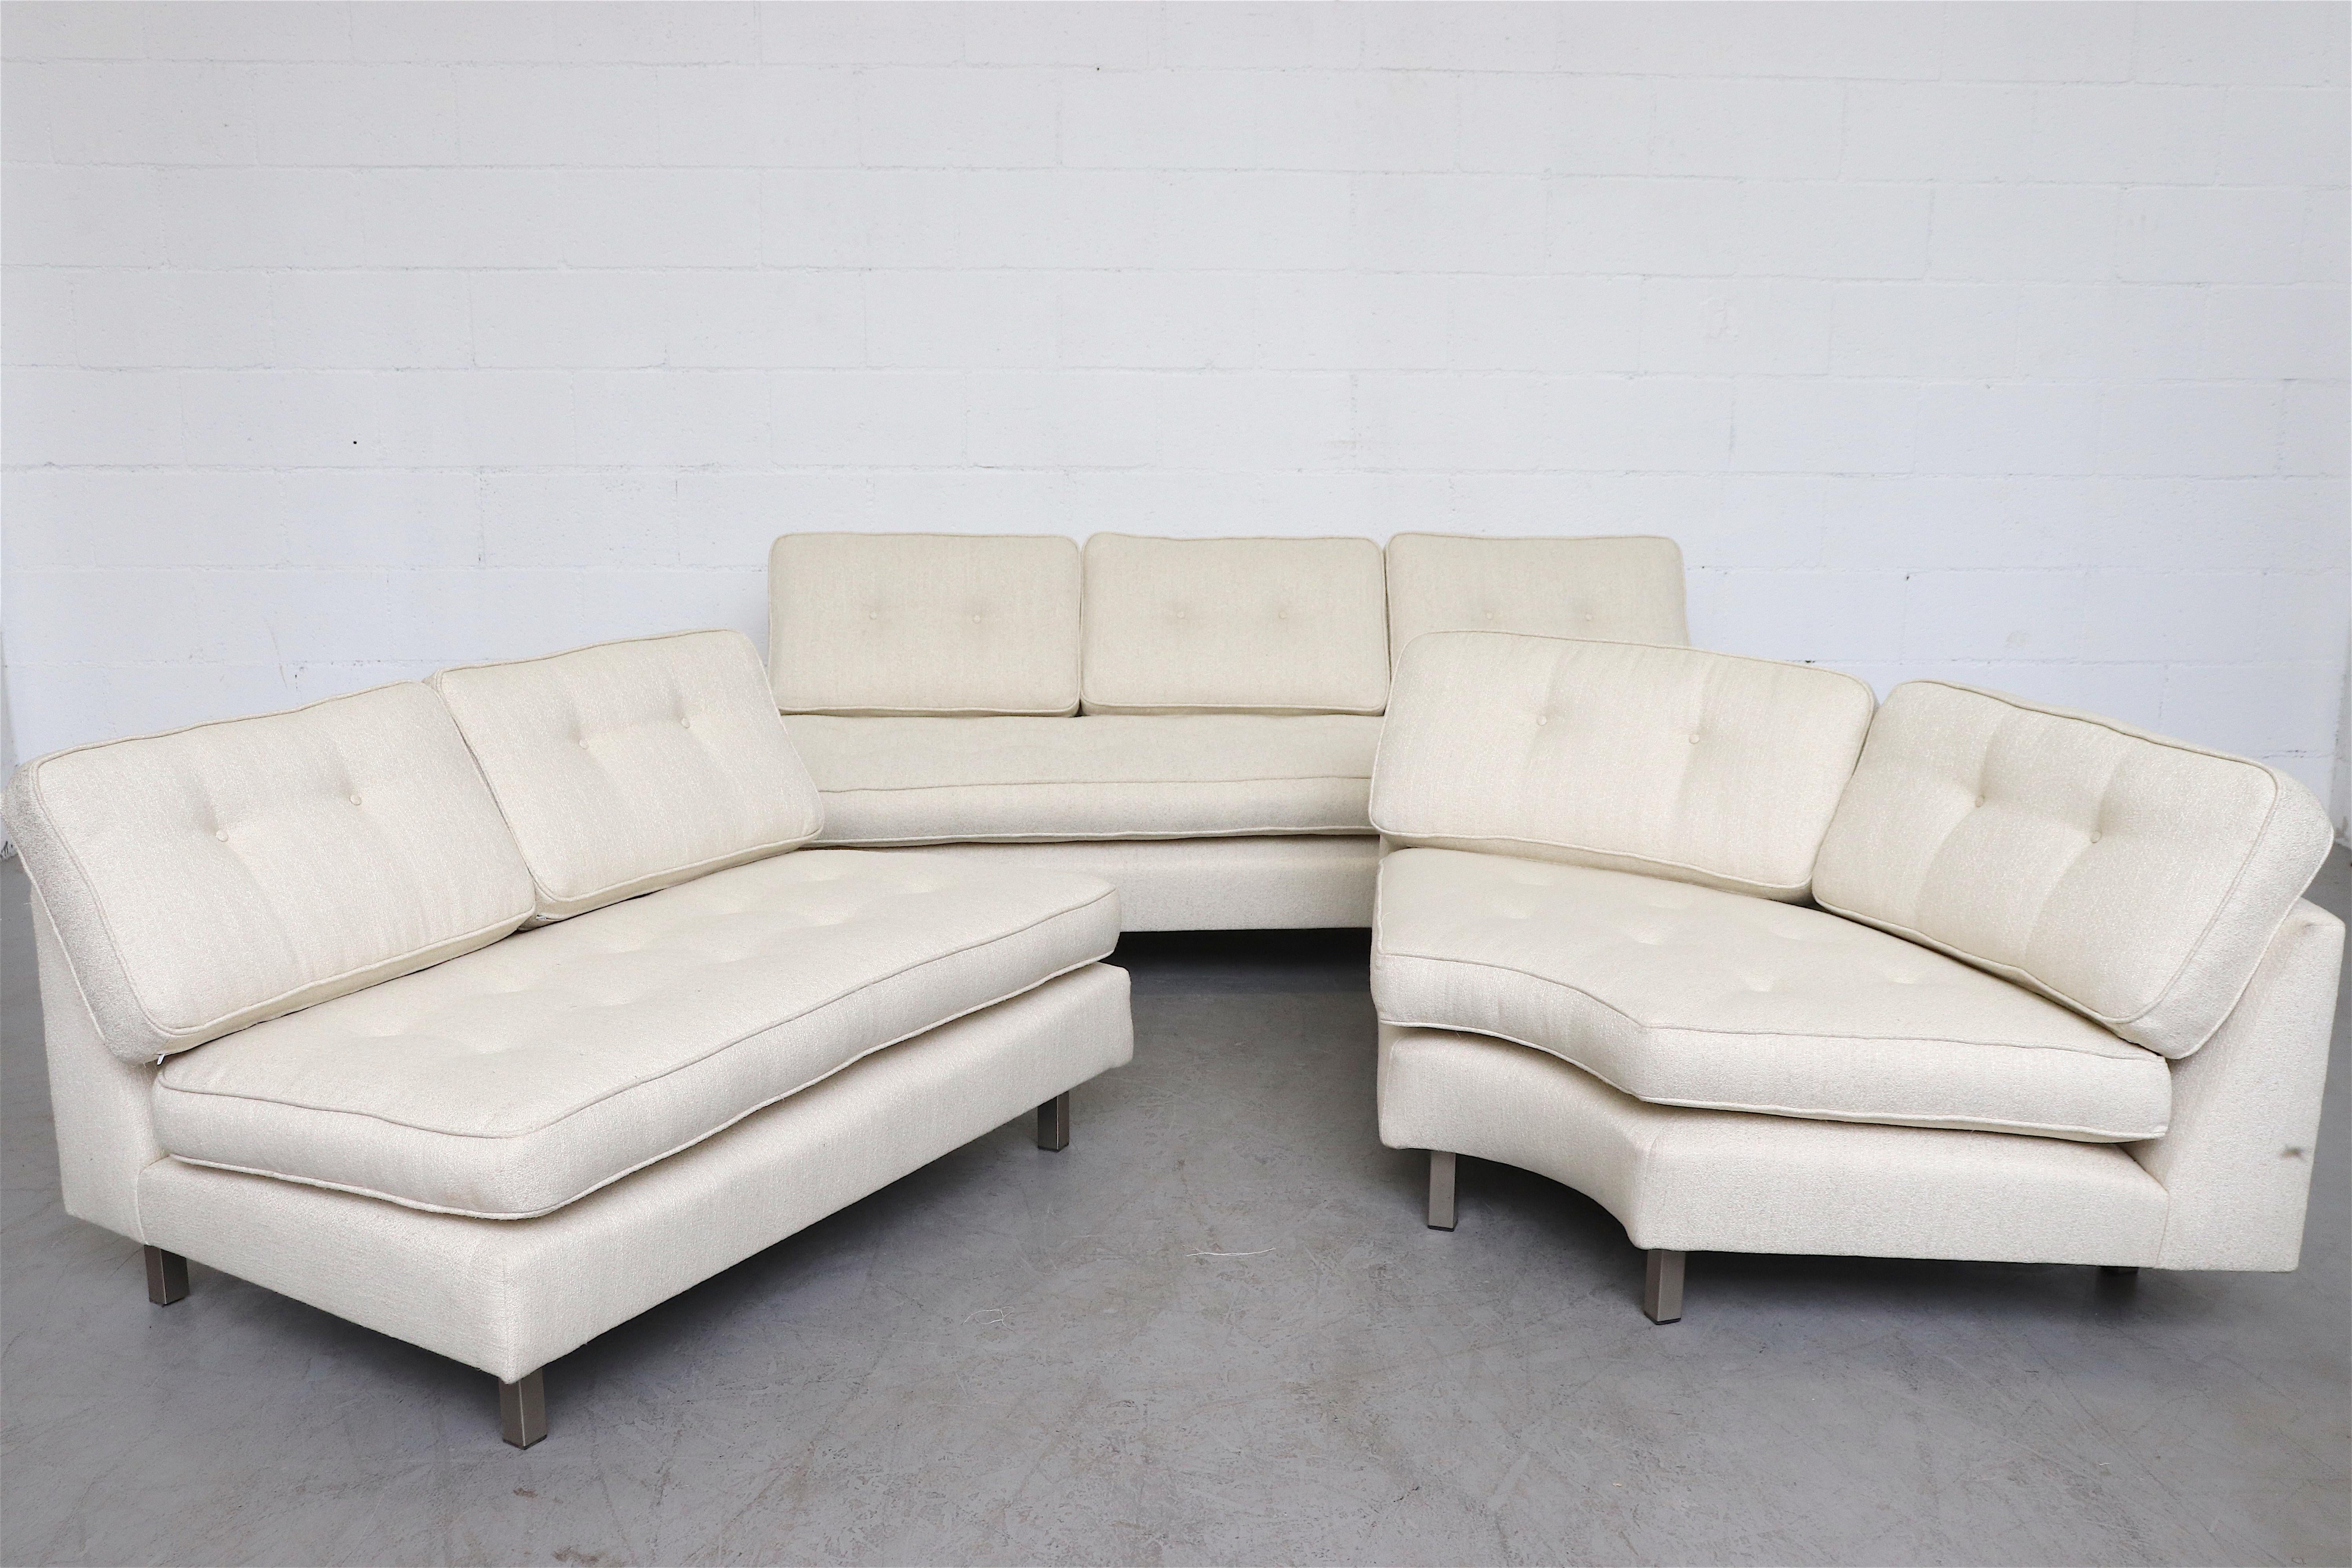 Dutch Artifort 3-Piece Sectional Sofa by Geoffrey Harcourt